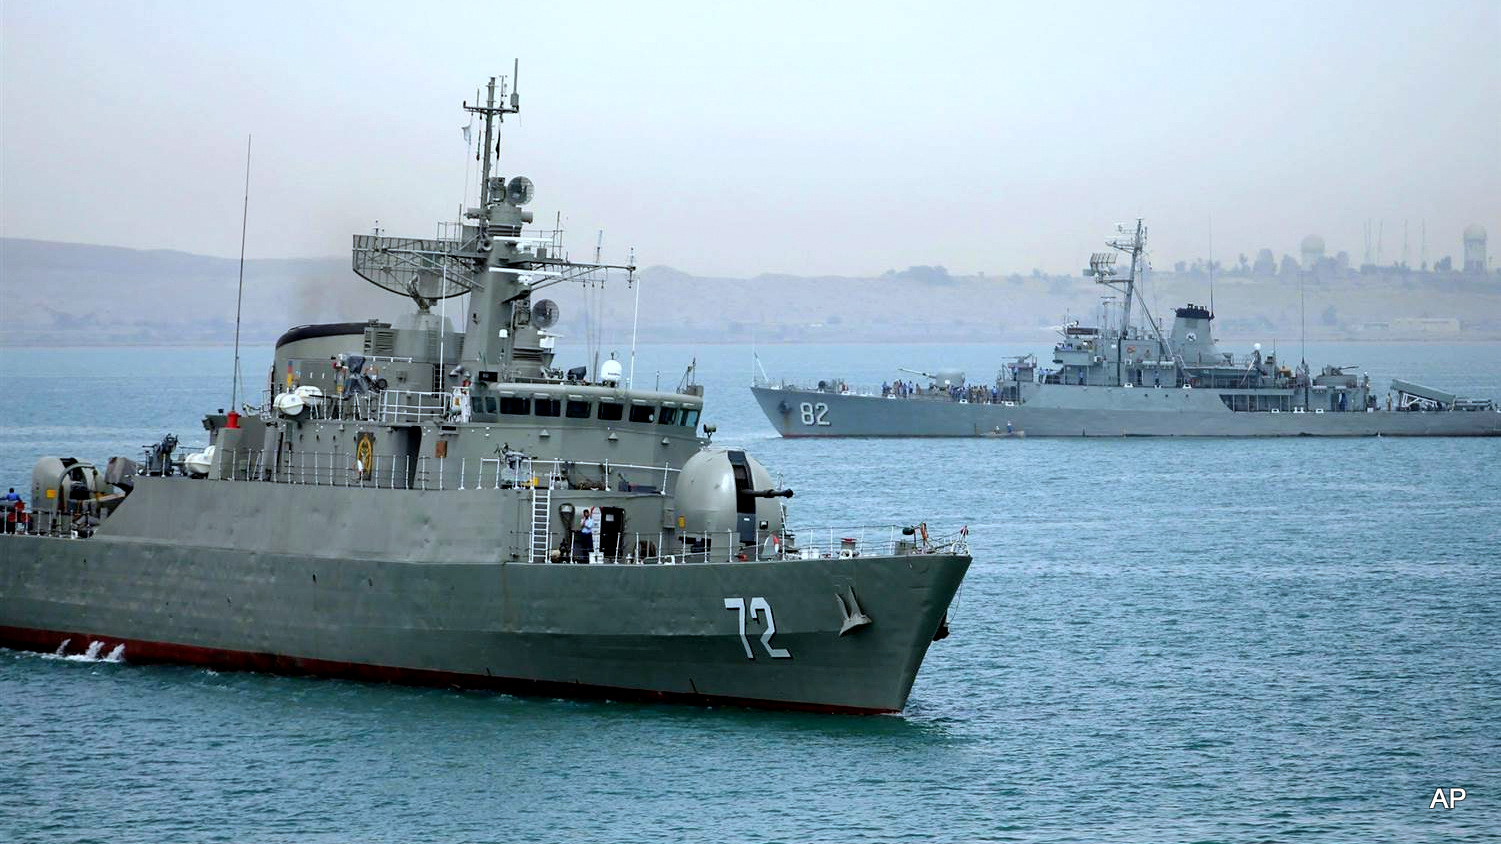 The Iranian warship Alborz, foreground, prepares before leaving Iran's waters on April 7, 2015. Mahdi Marizad / Fars News Agency via AP